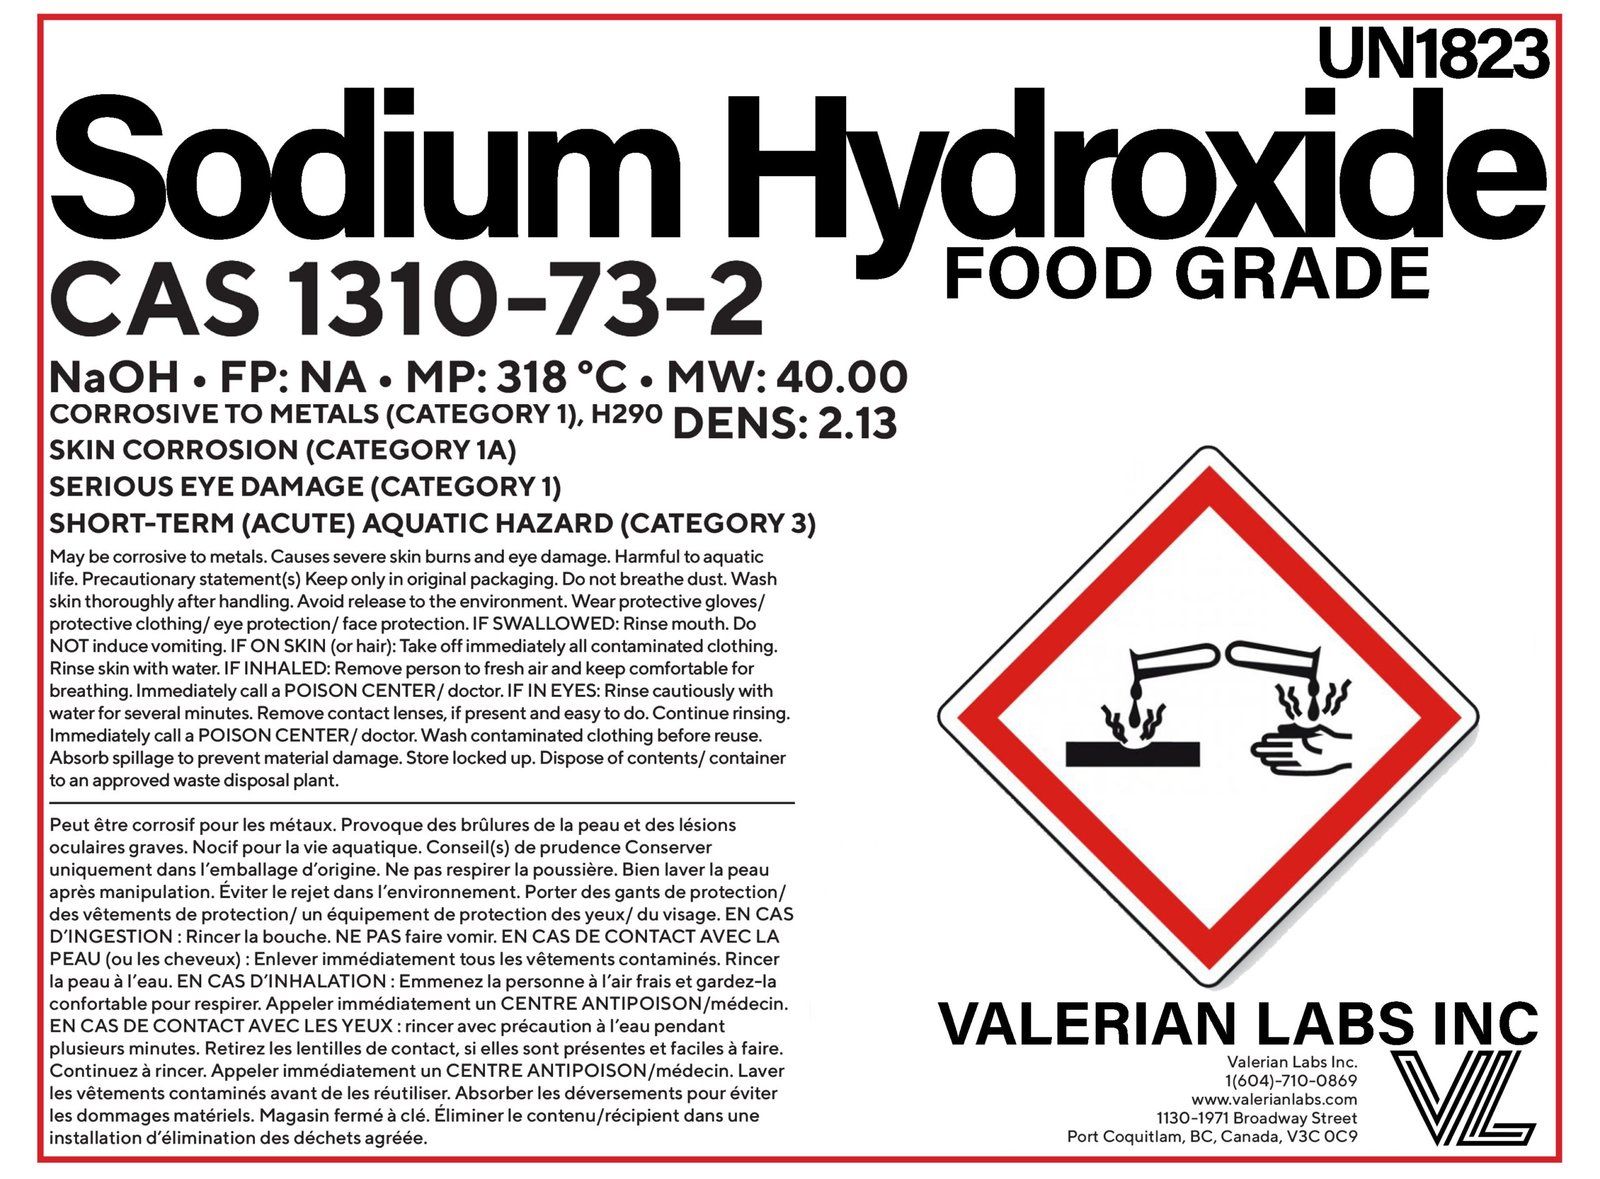 Sodium Hydroxide (Food Grade)